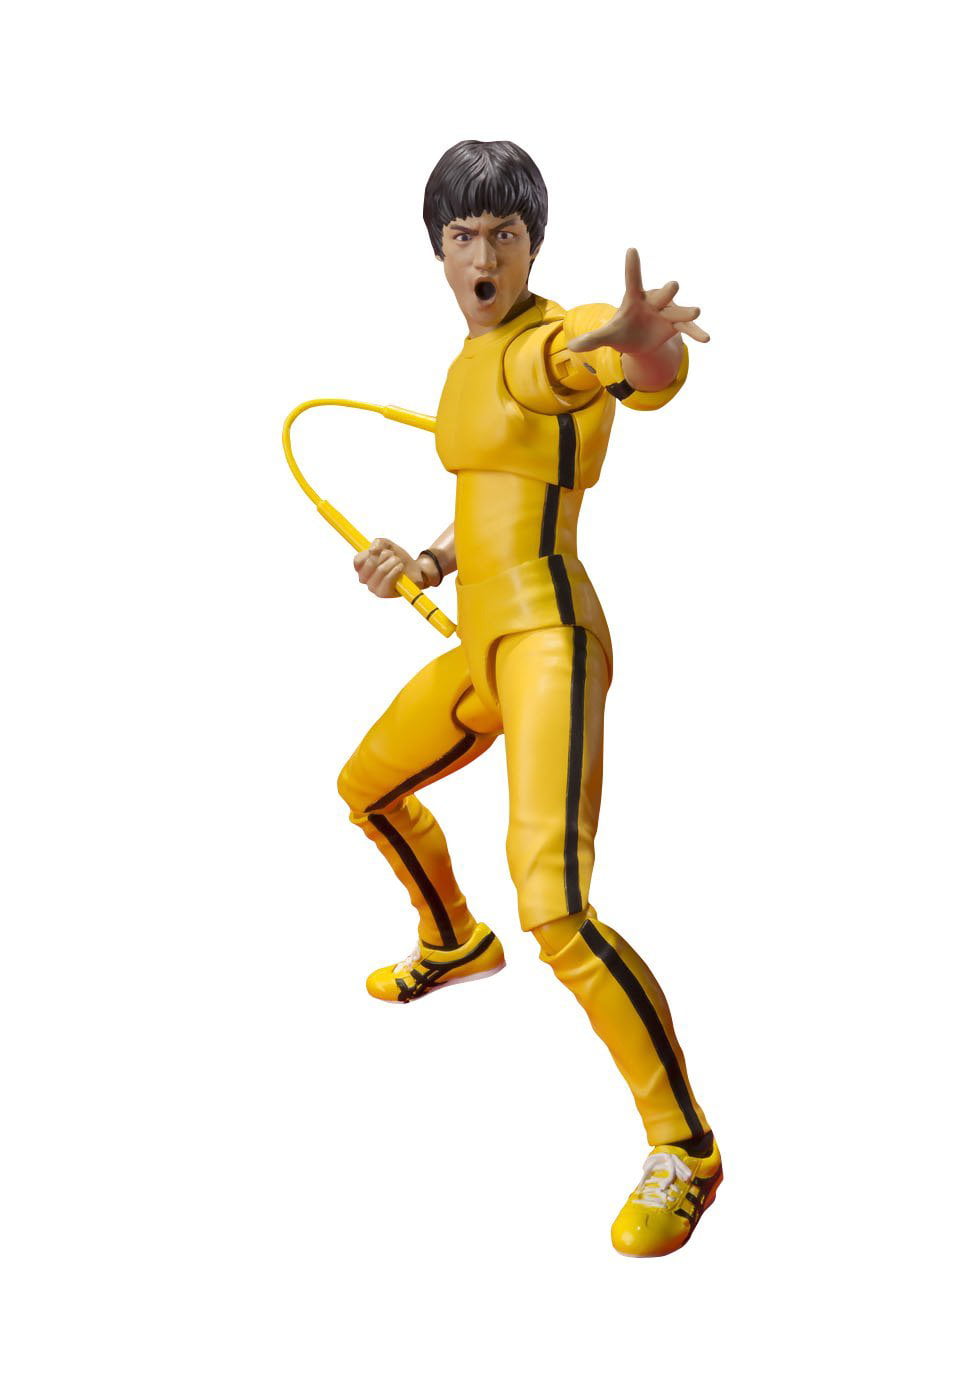 S H Figuarts Bruce Lee Action Figure Yellow Track Suit Walmart Com Walmart Com